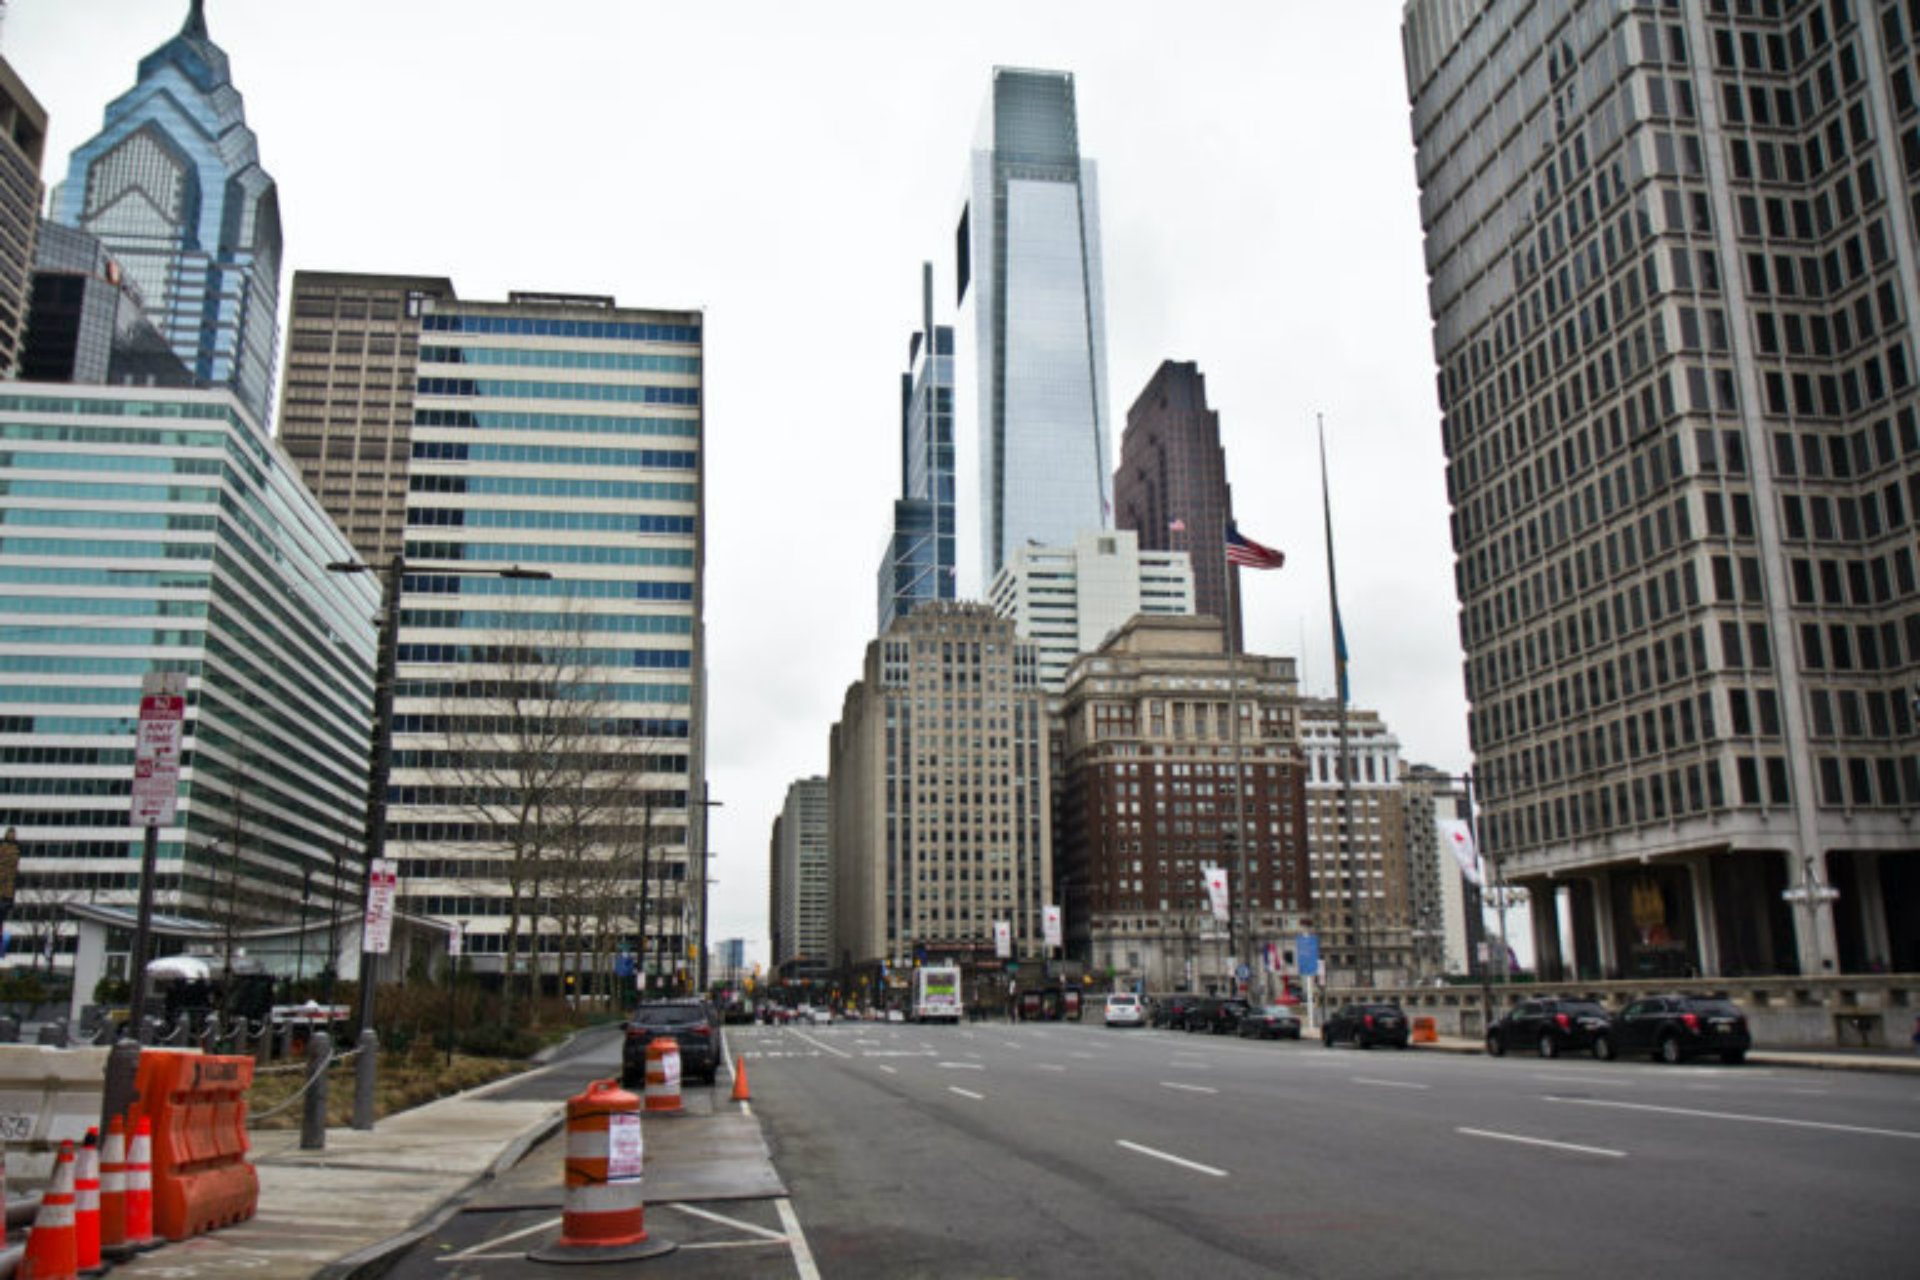 Philadelphia streets have slowed down in the wake of the coronavirus shutdown. (Kimberly Paynter/WHYY)